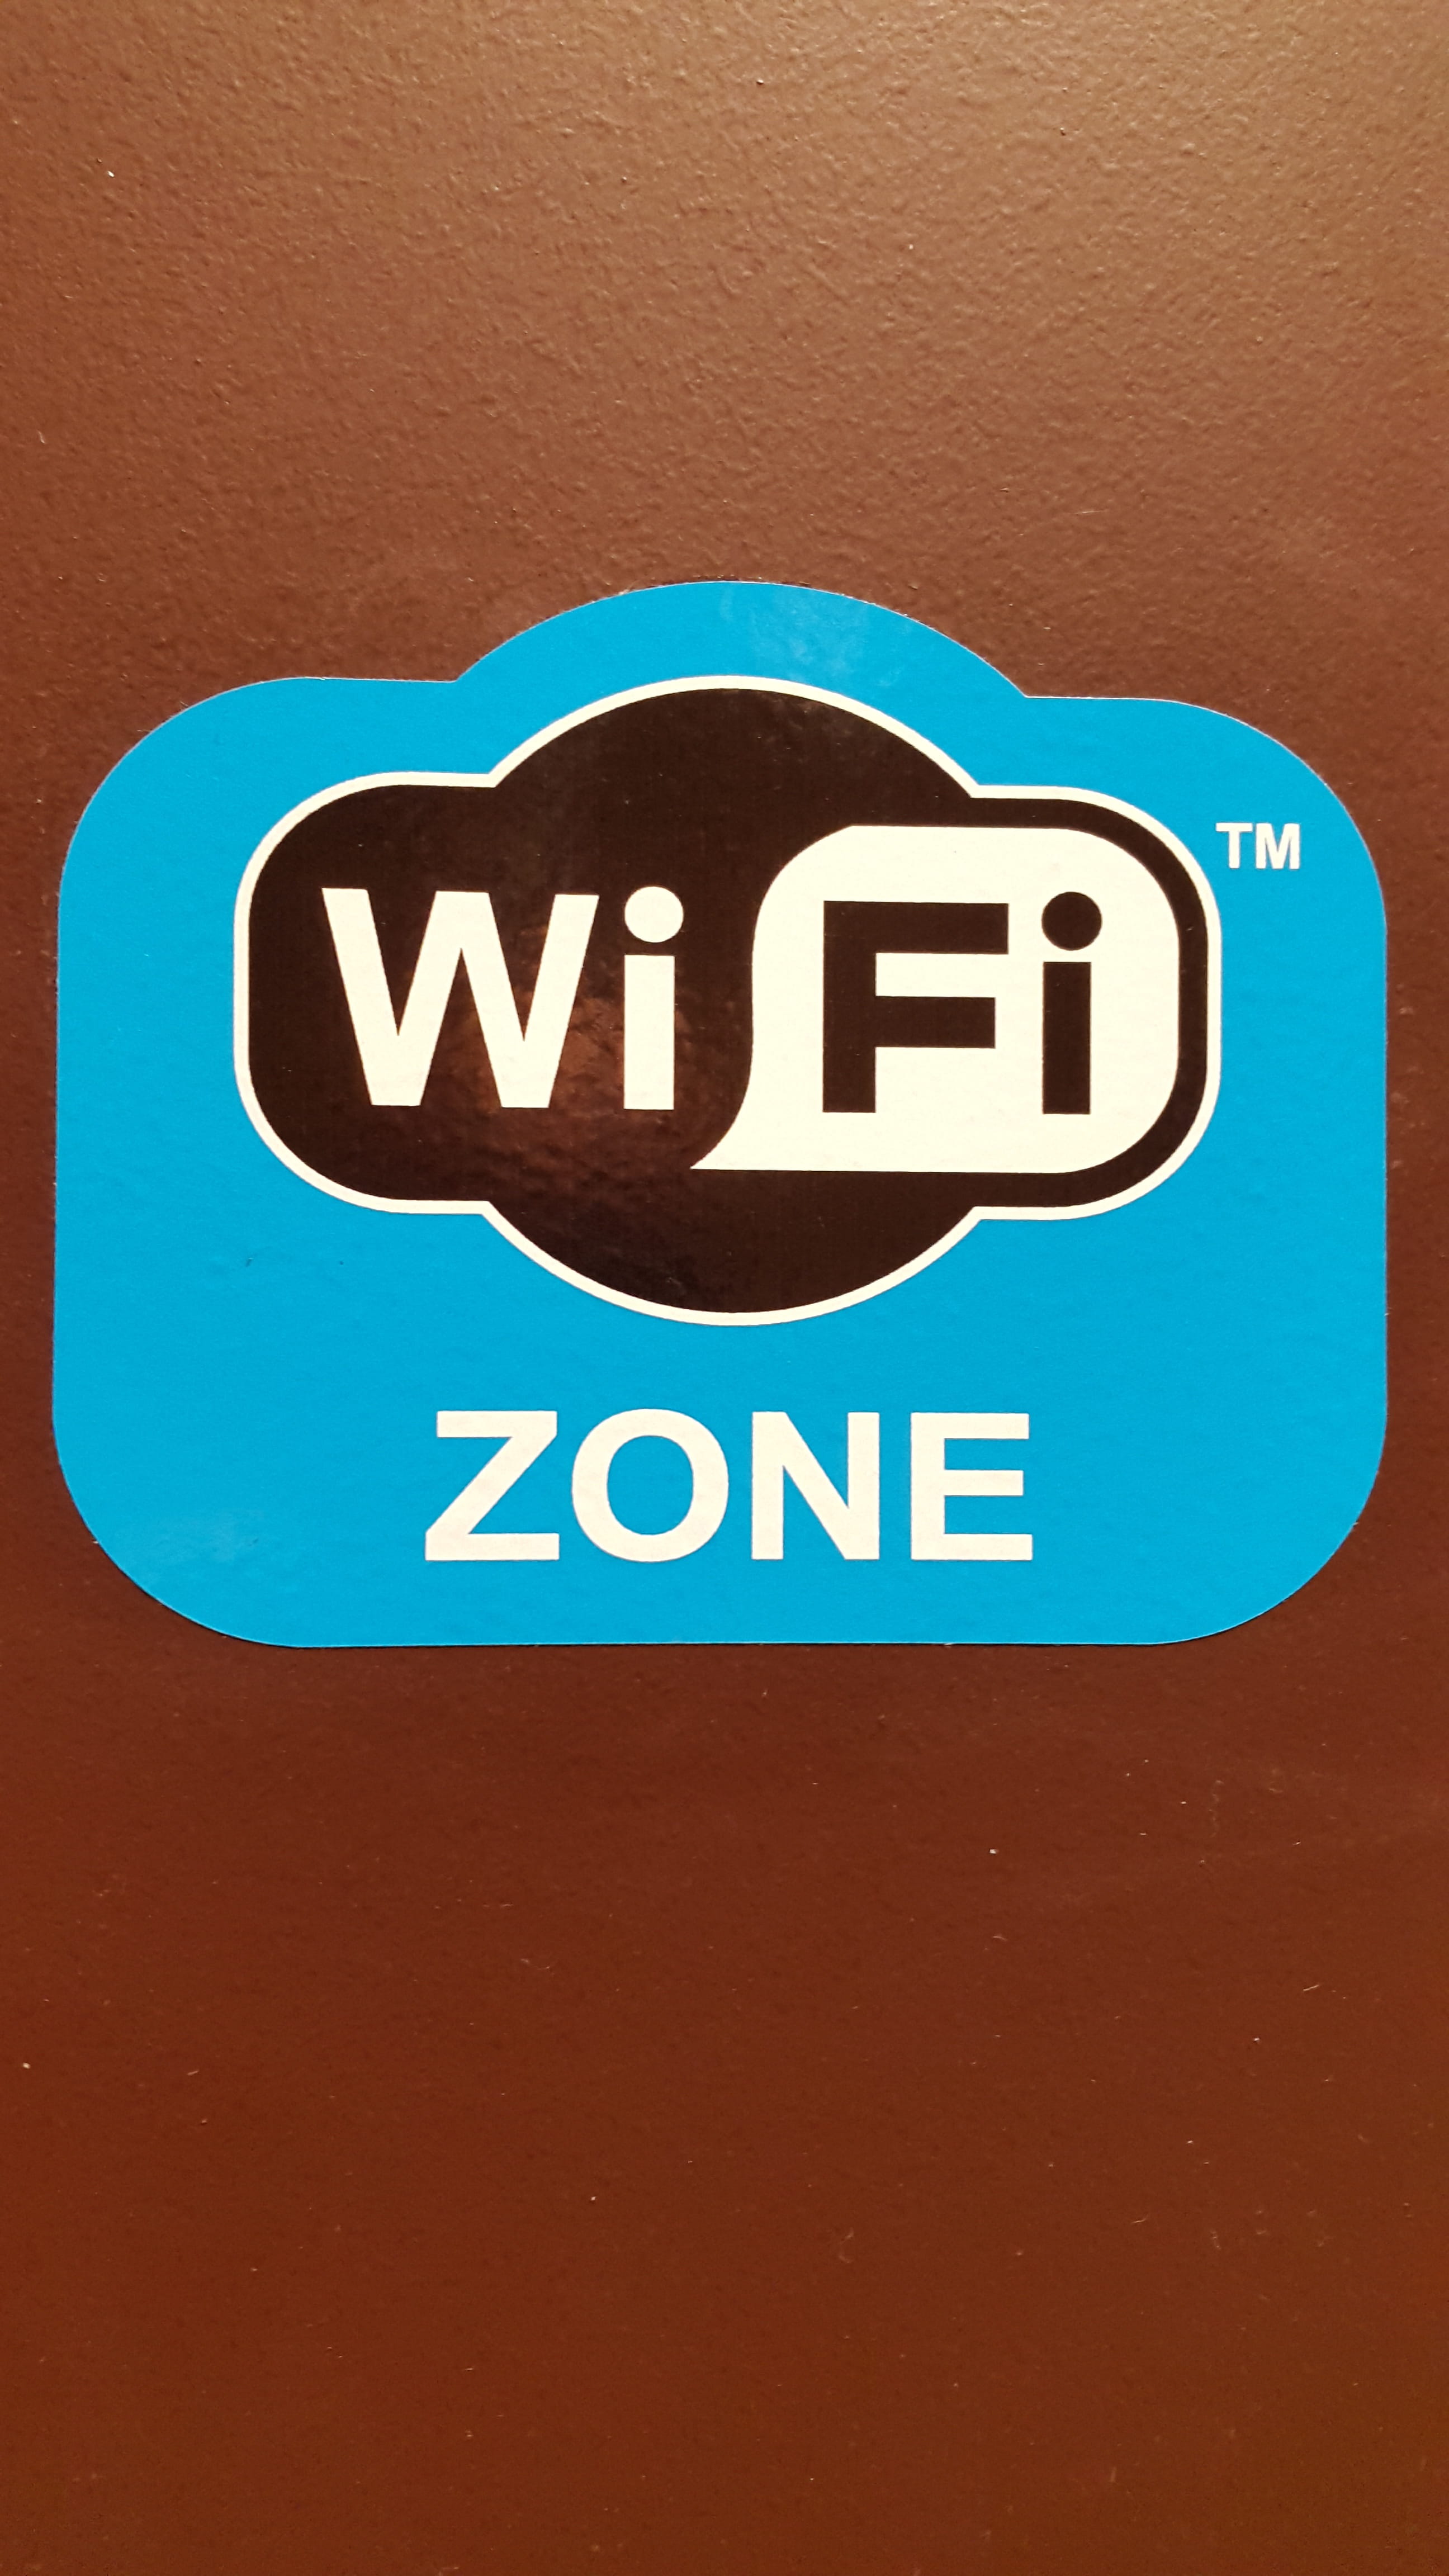 WIfi Zone logo graphic, Wifi, Zone, Shield, Note, Surf, street sign